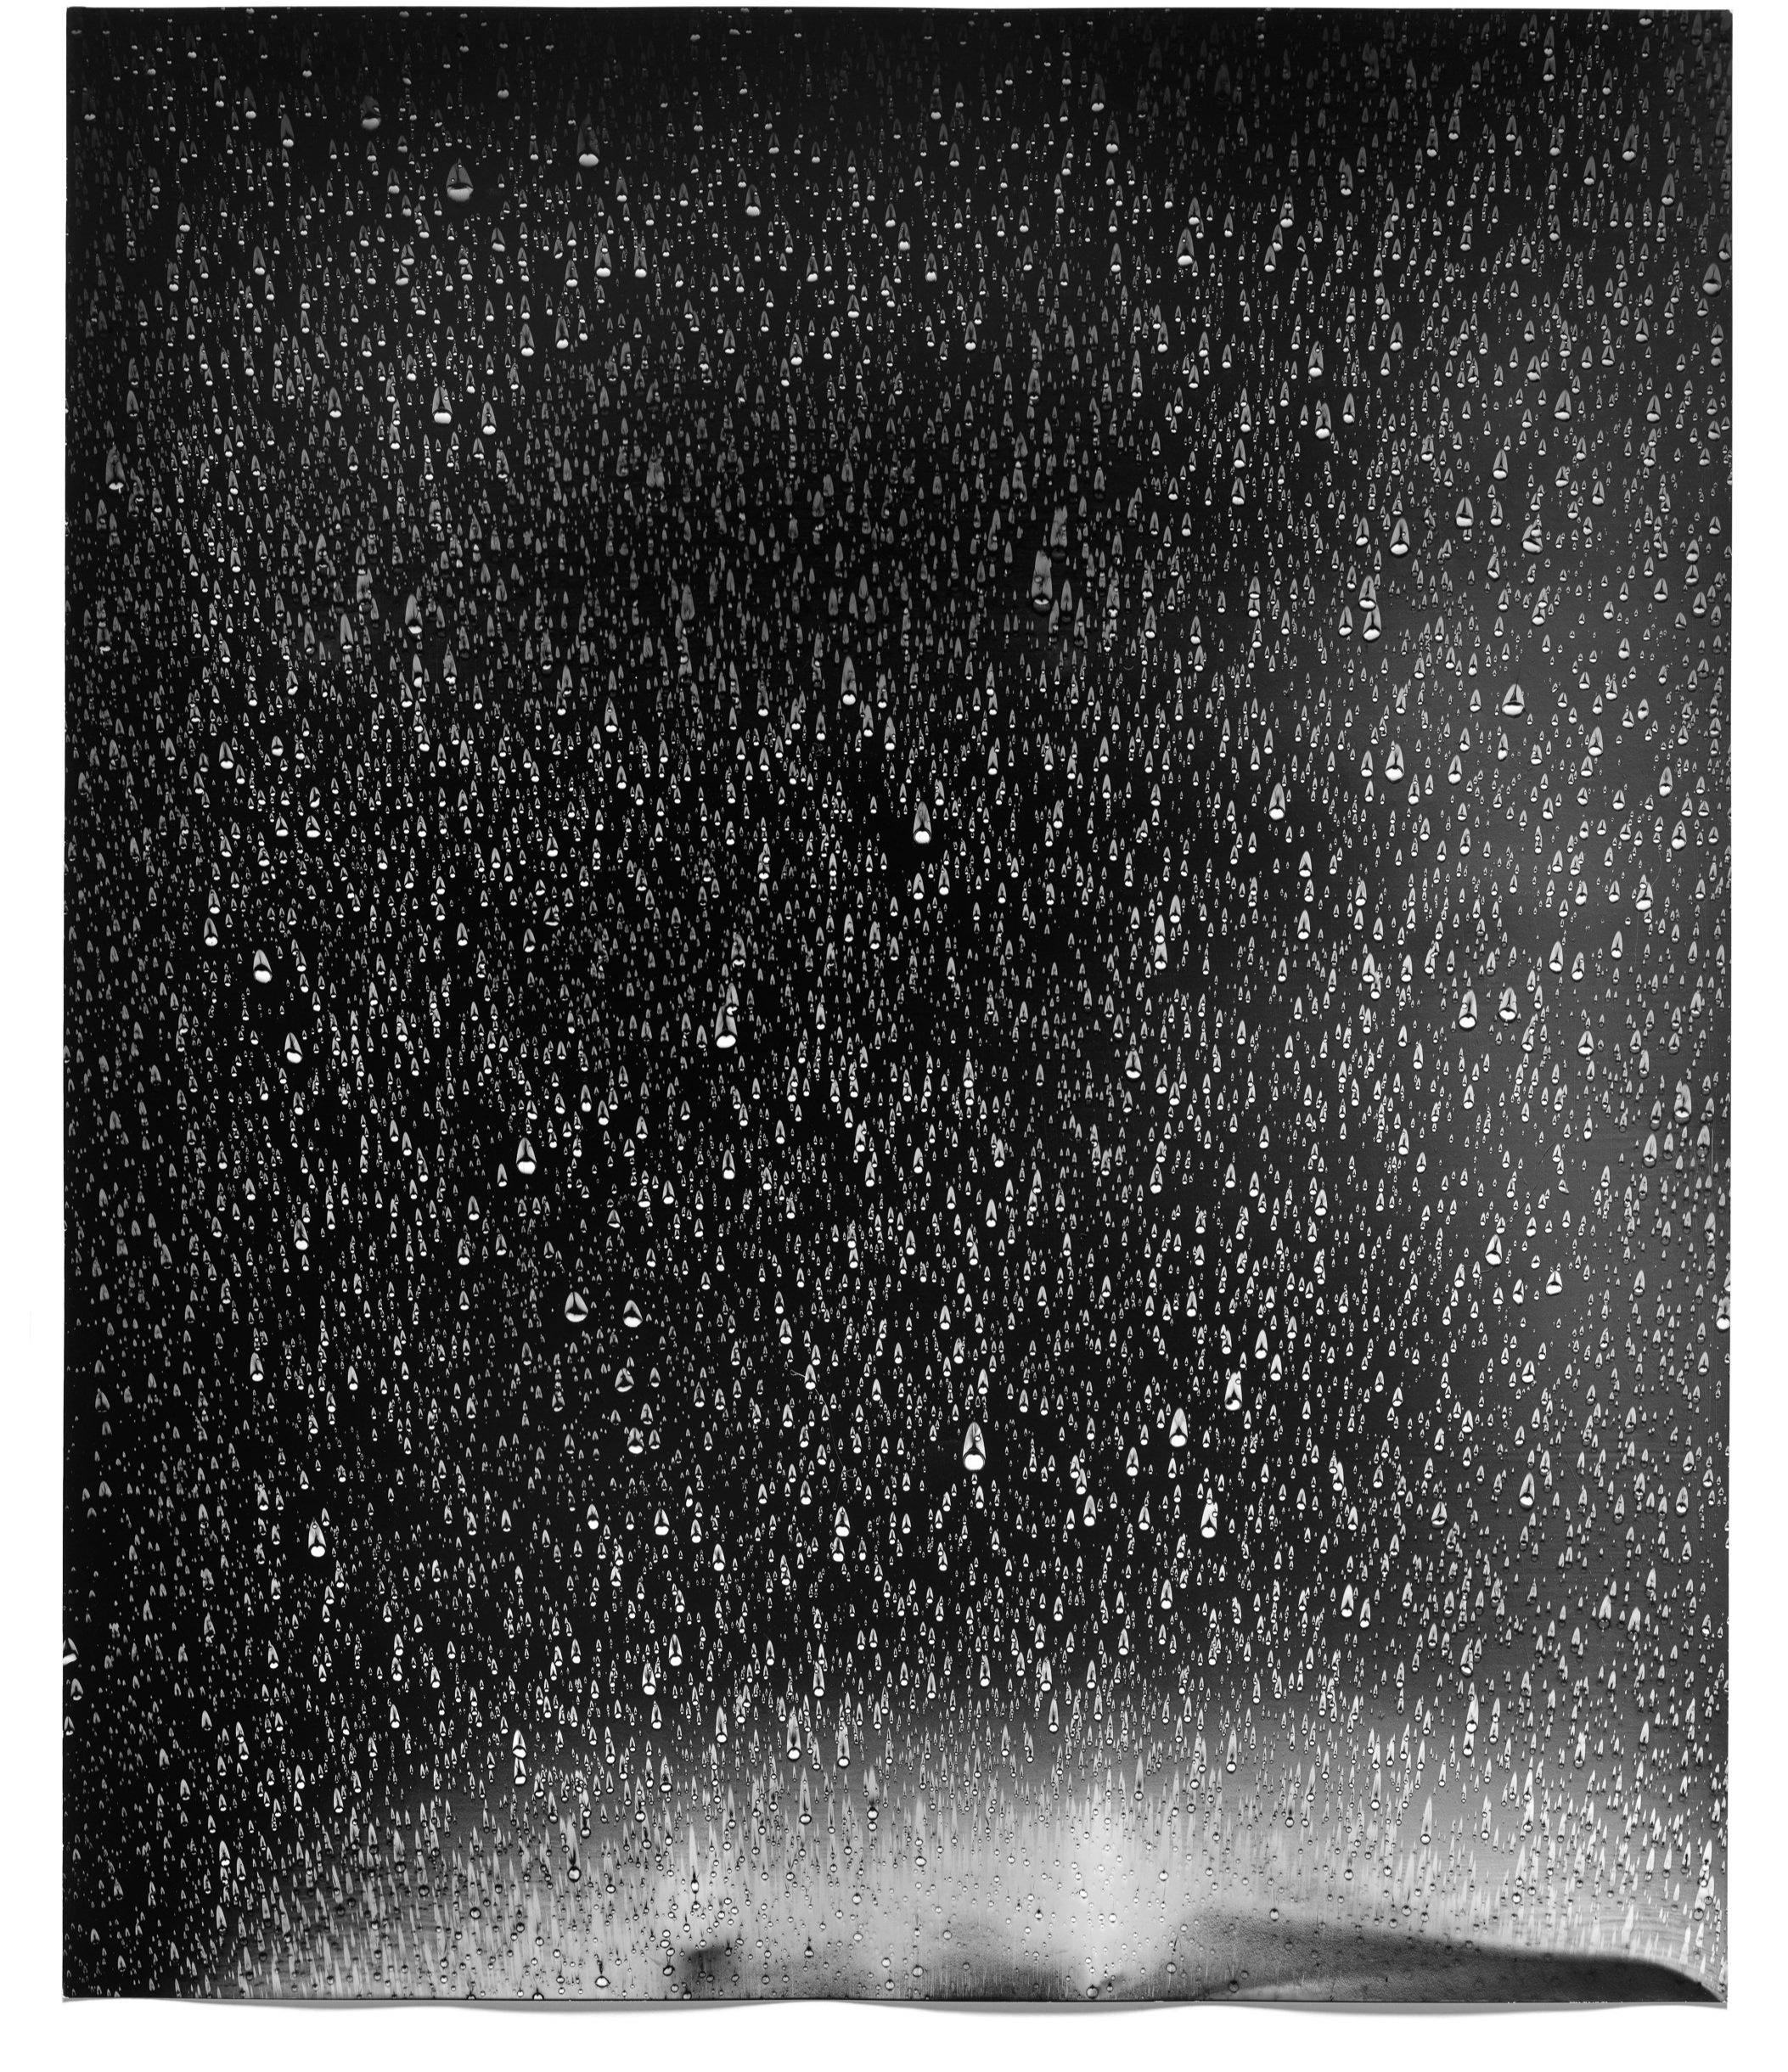   Rain Study (California 2),  2013   Silver gelatin photogram 24 x 20 in 